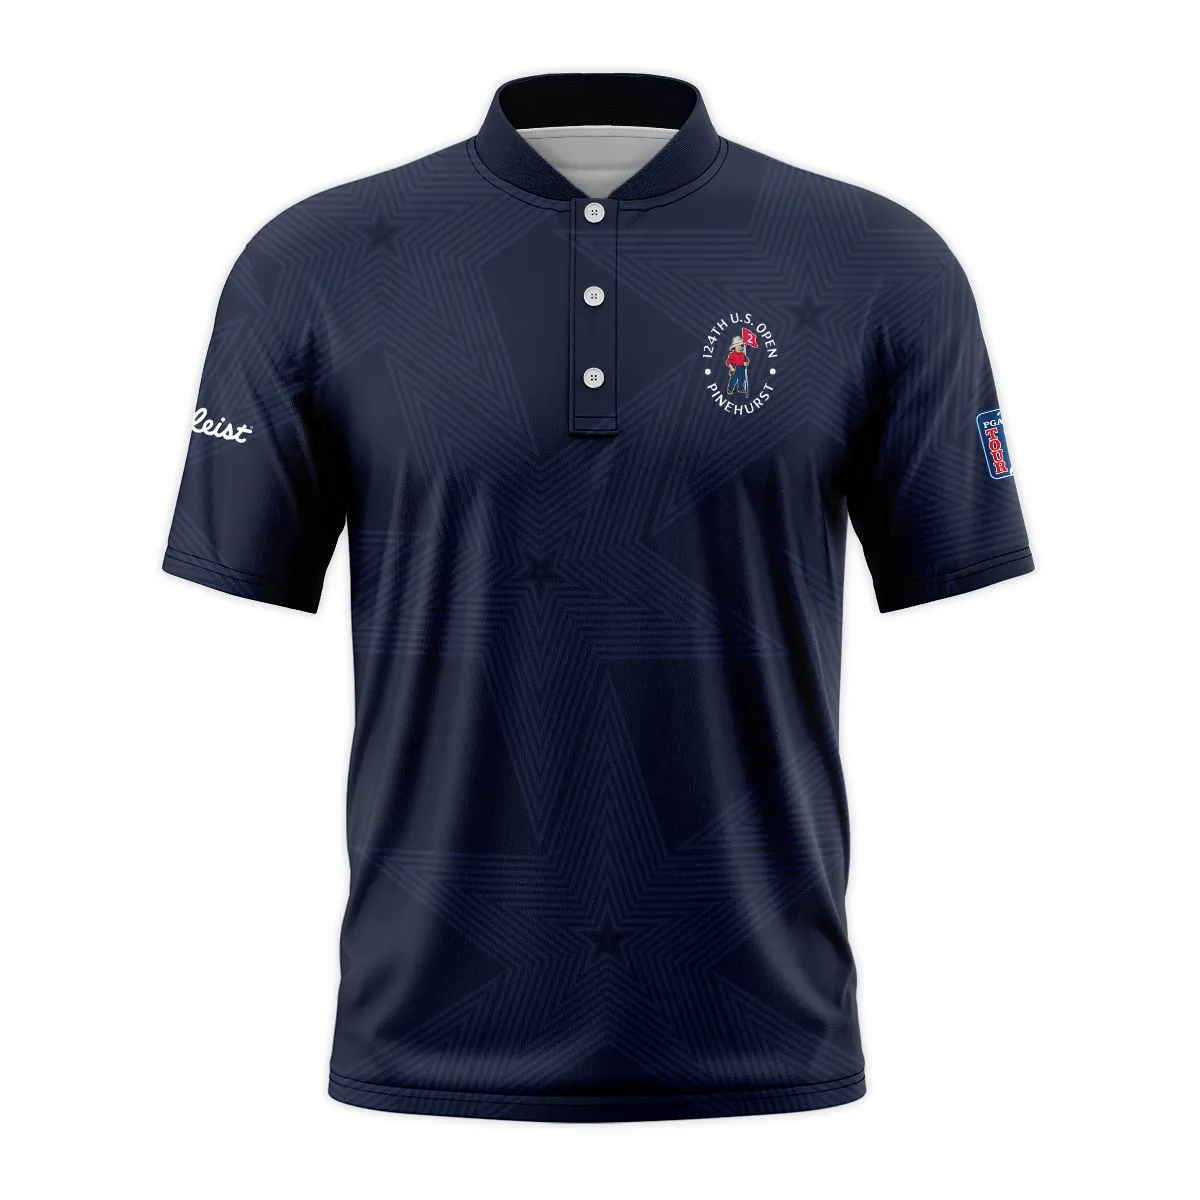 Golf Navy Color Star Pattern 124th U.S. Open Pinehurst Titlest Long Polo Shirt Style Classic